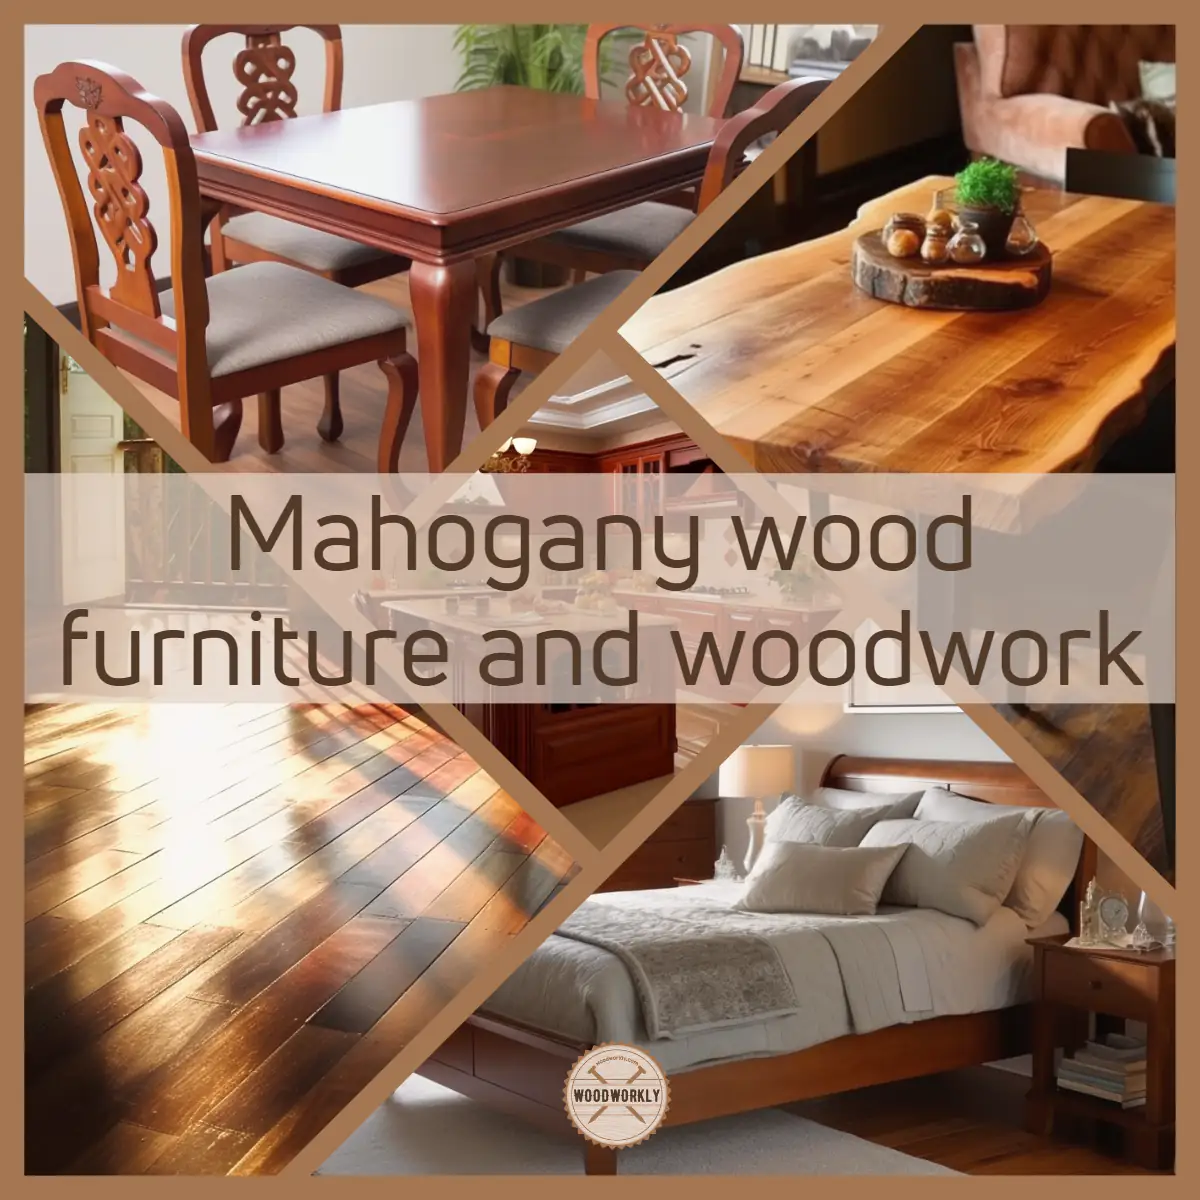 Mahogany wood furniture and woodwork